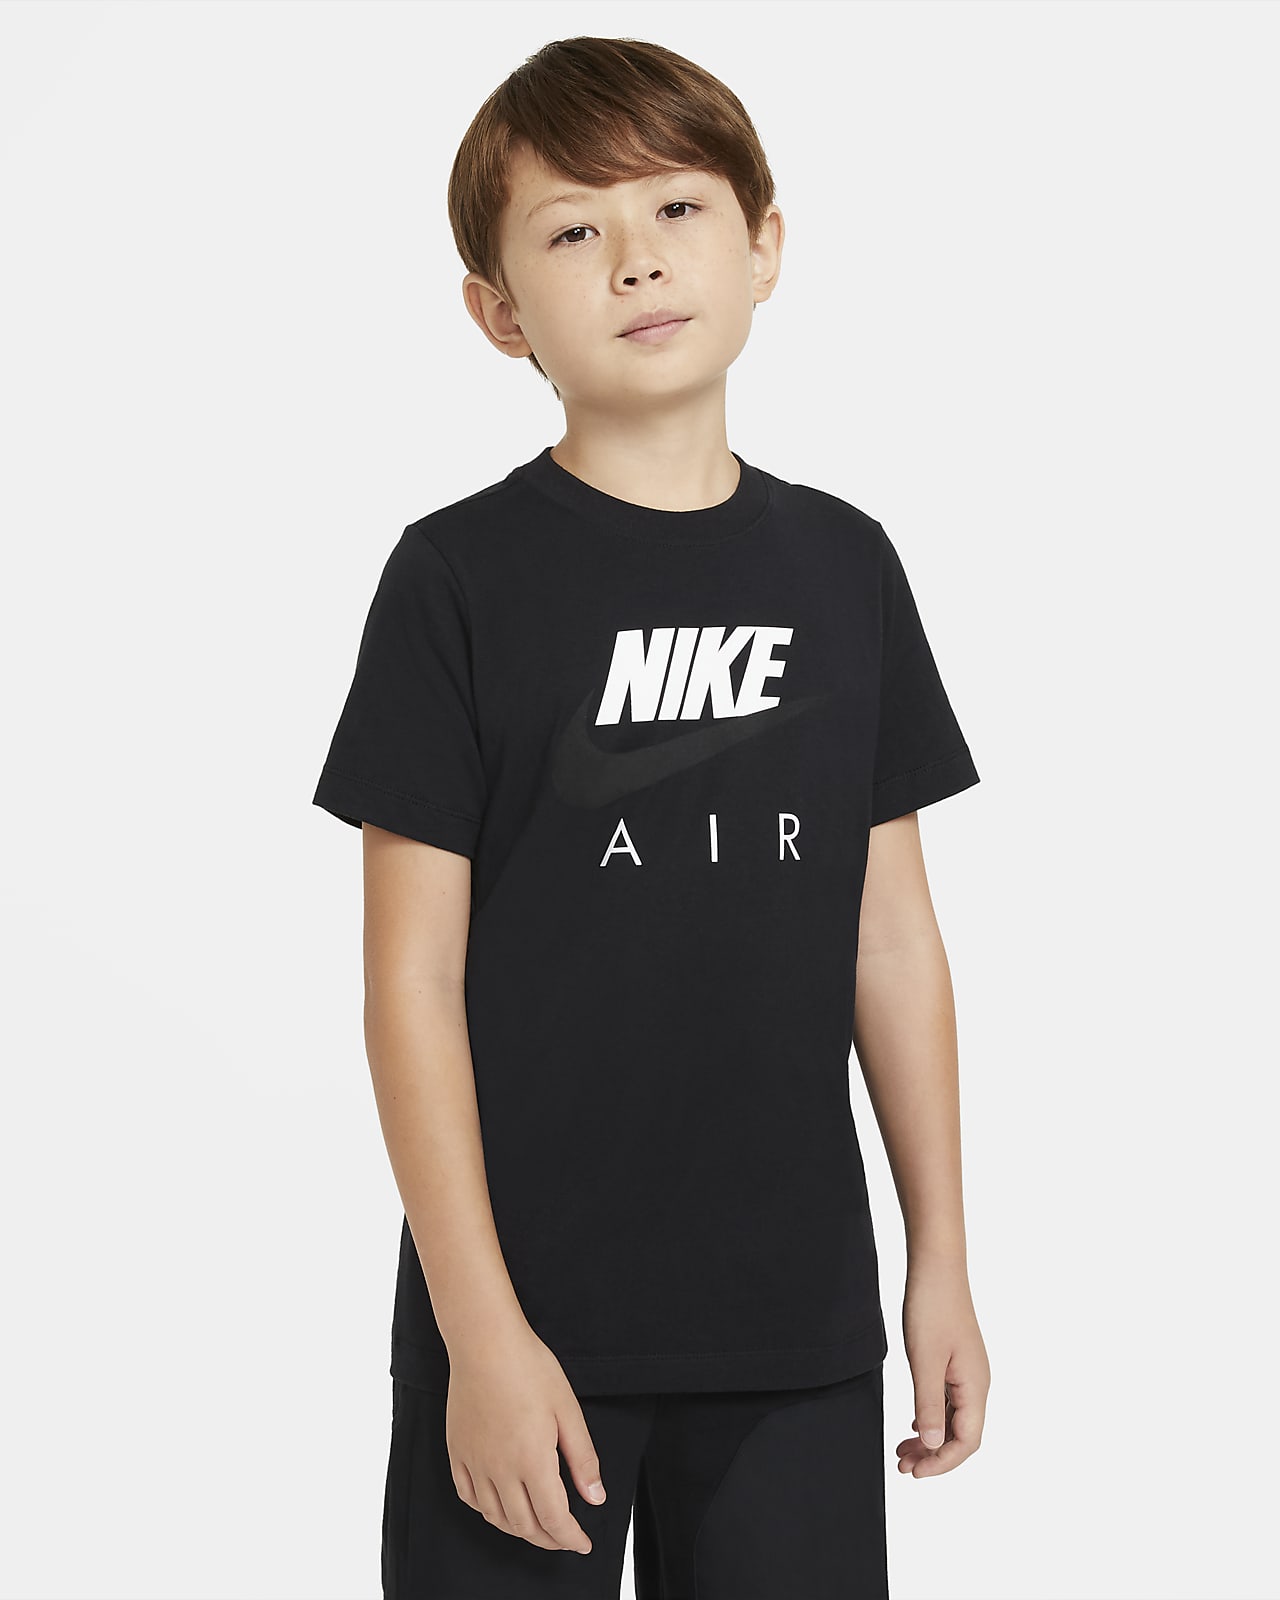 Nike Air - ES